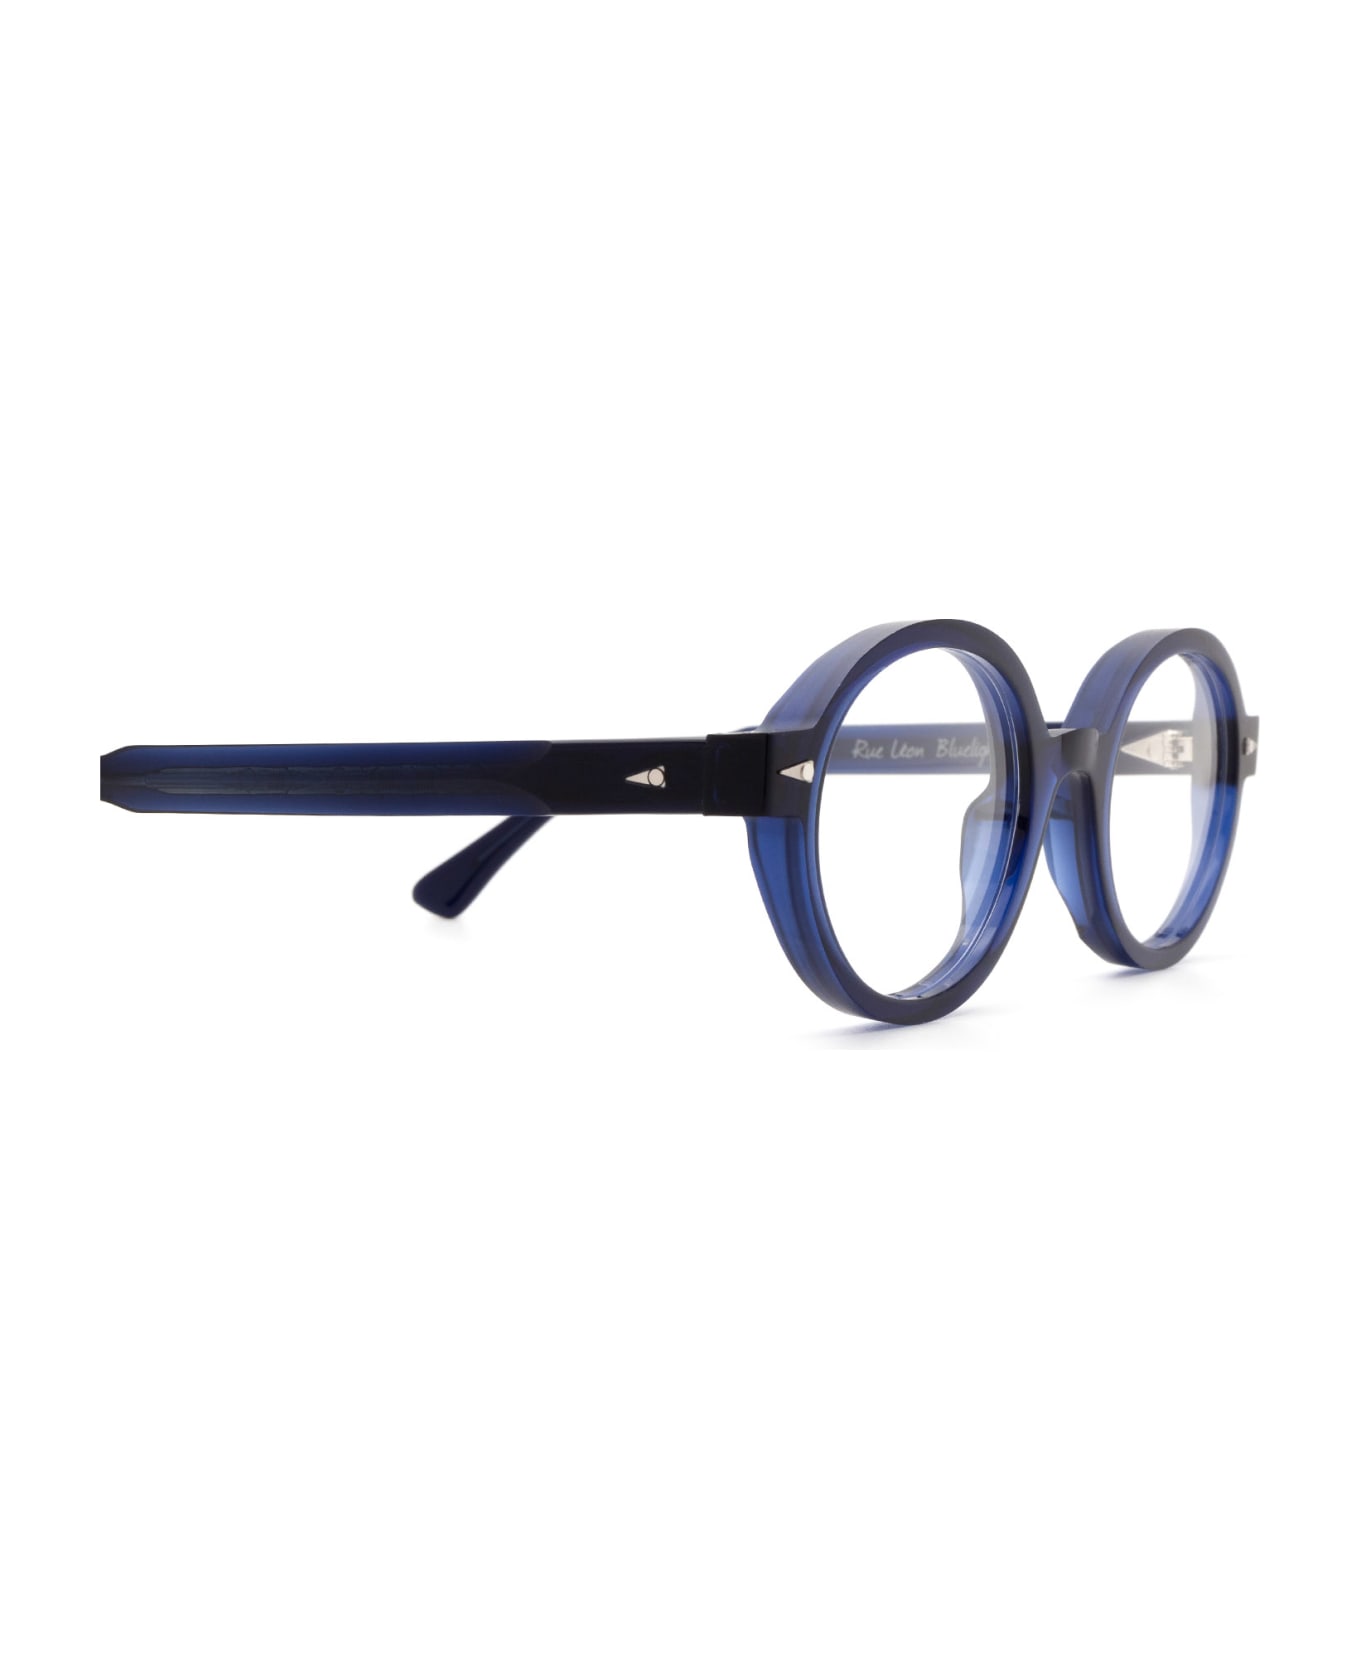 AHLEM Rue Leon Optic Bluelight Glasses